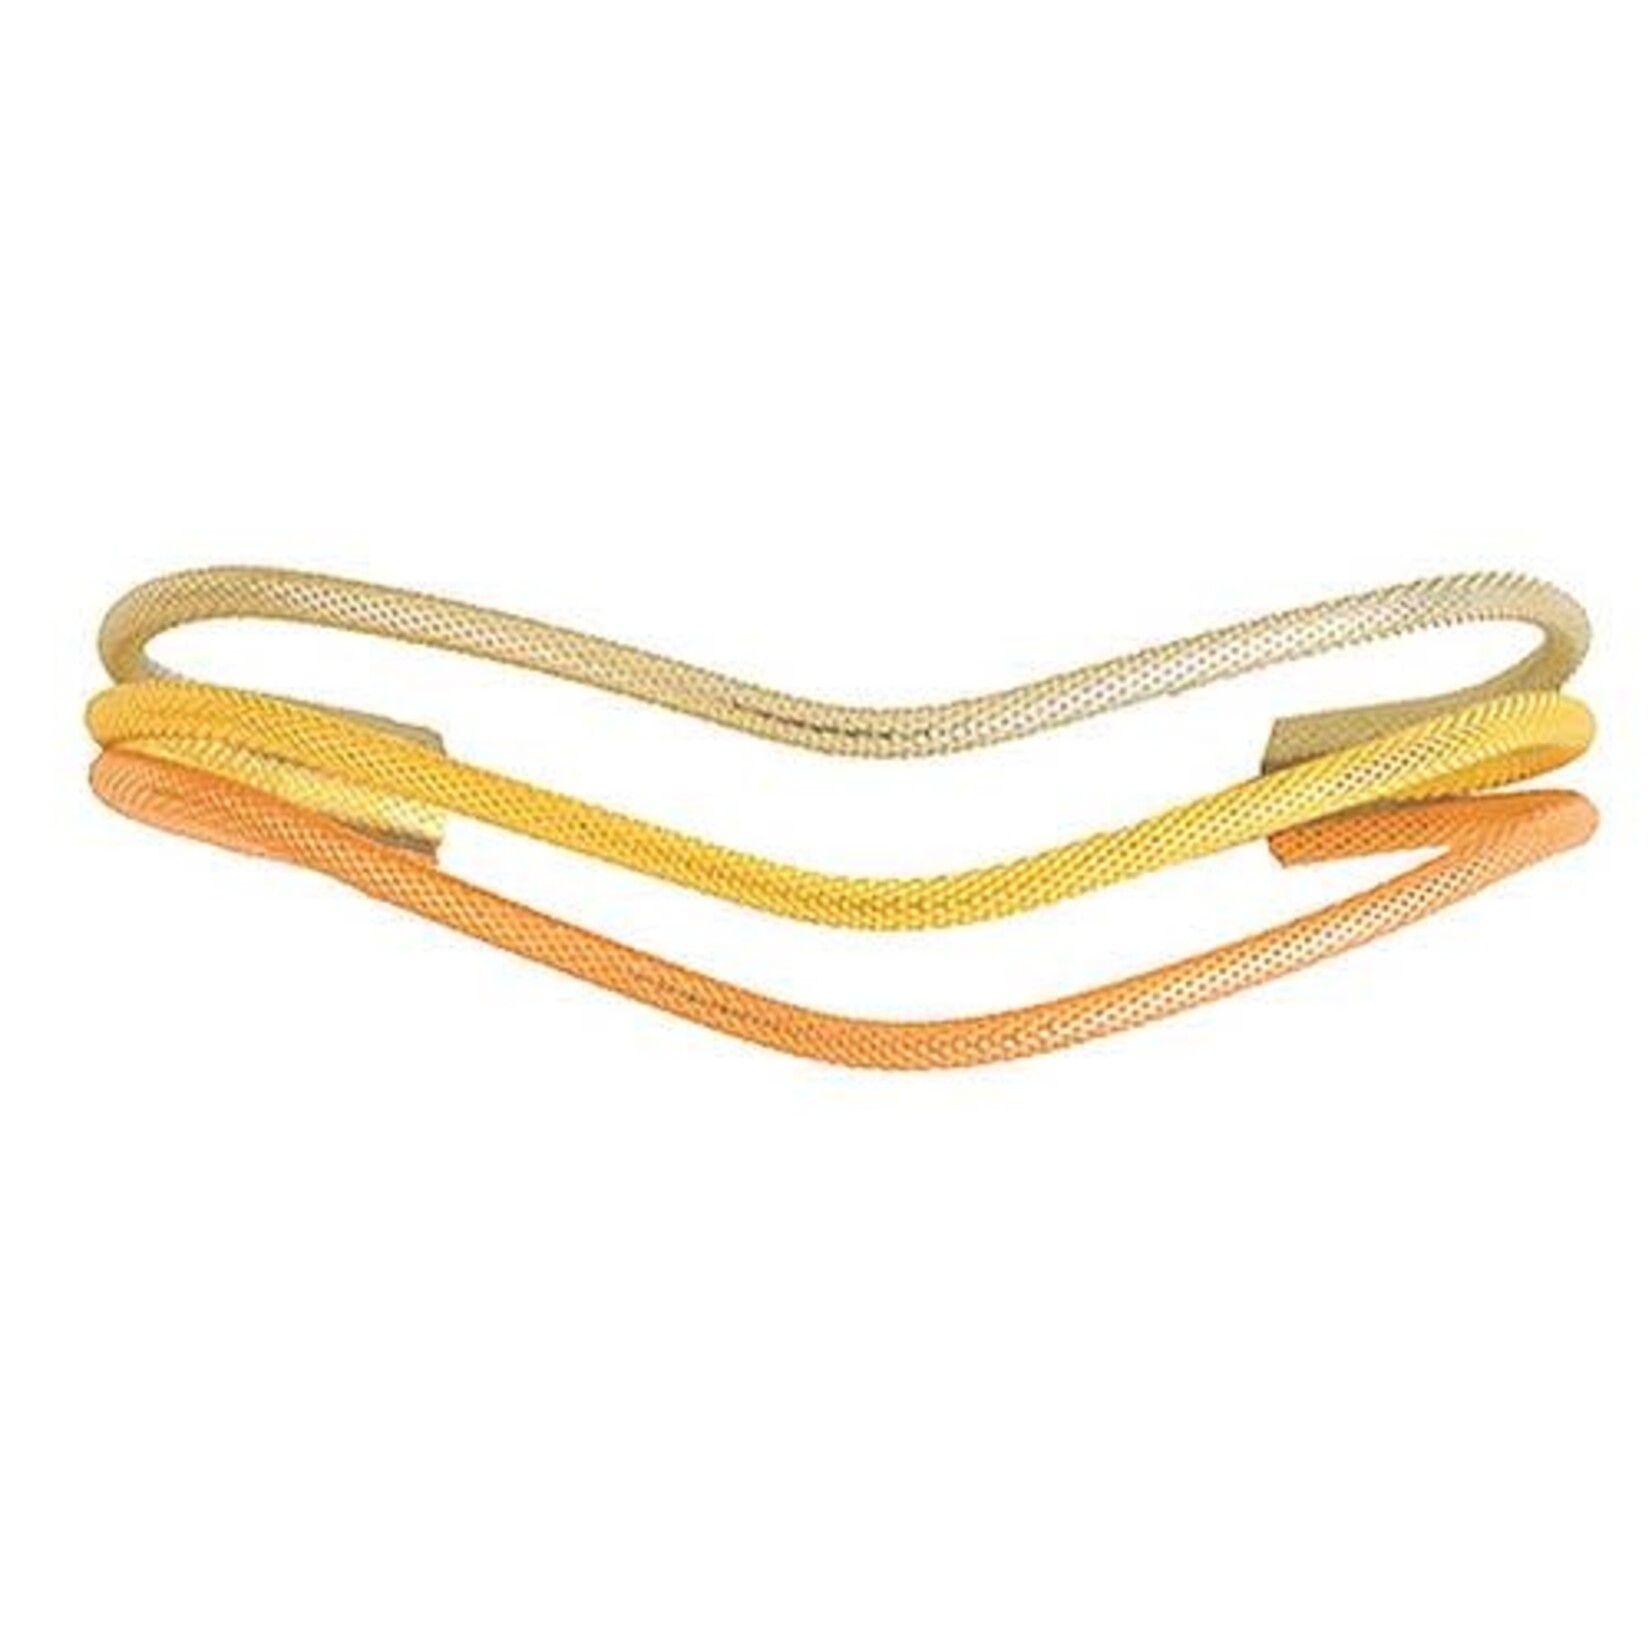 Sergio Lub Copper Bracelets Sergio Lub Copper Bracelets - $55